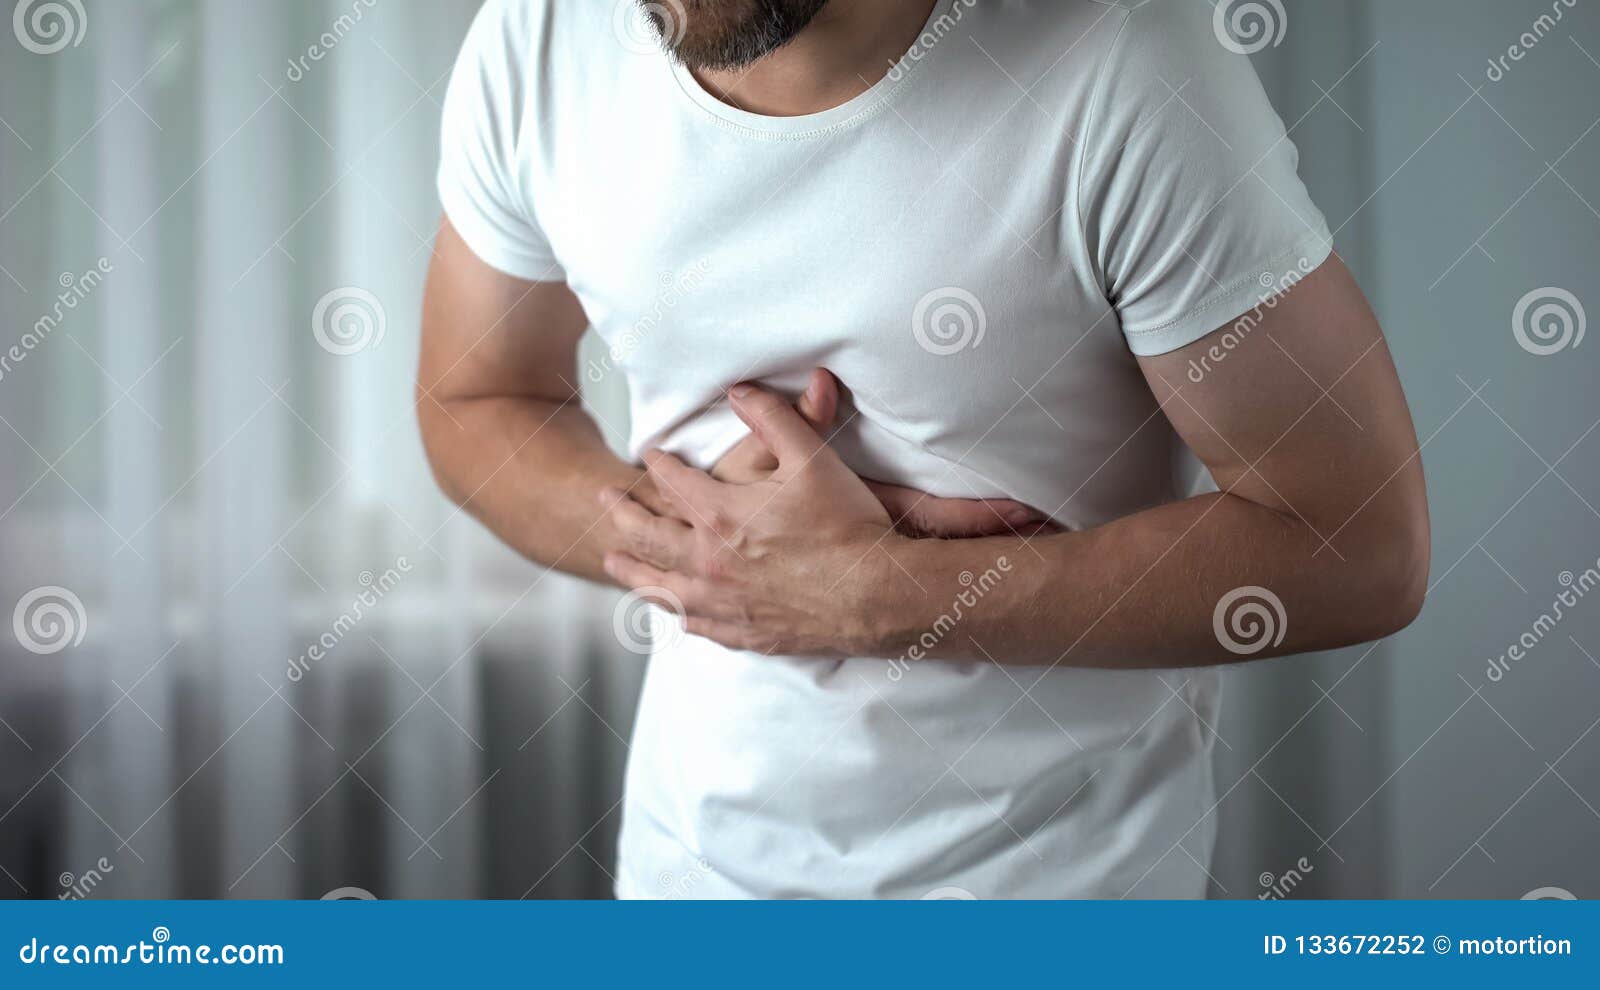 male feeling stomach pain at home, gastritis symptom, peptic ulcer, pancreatitis